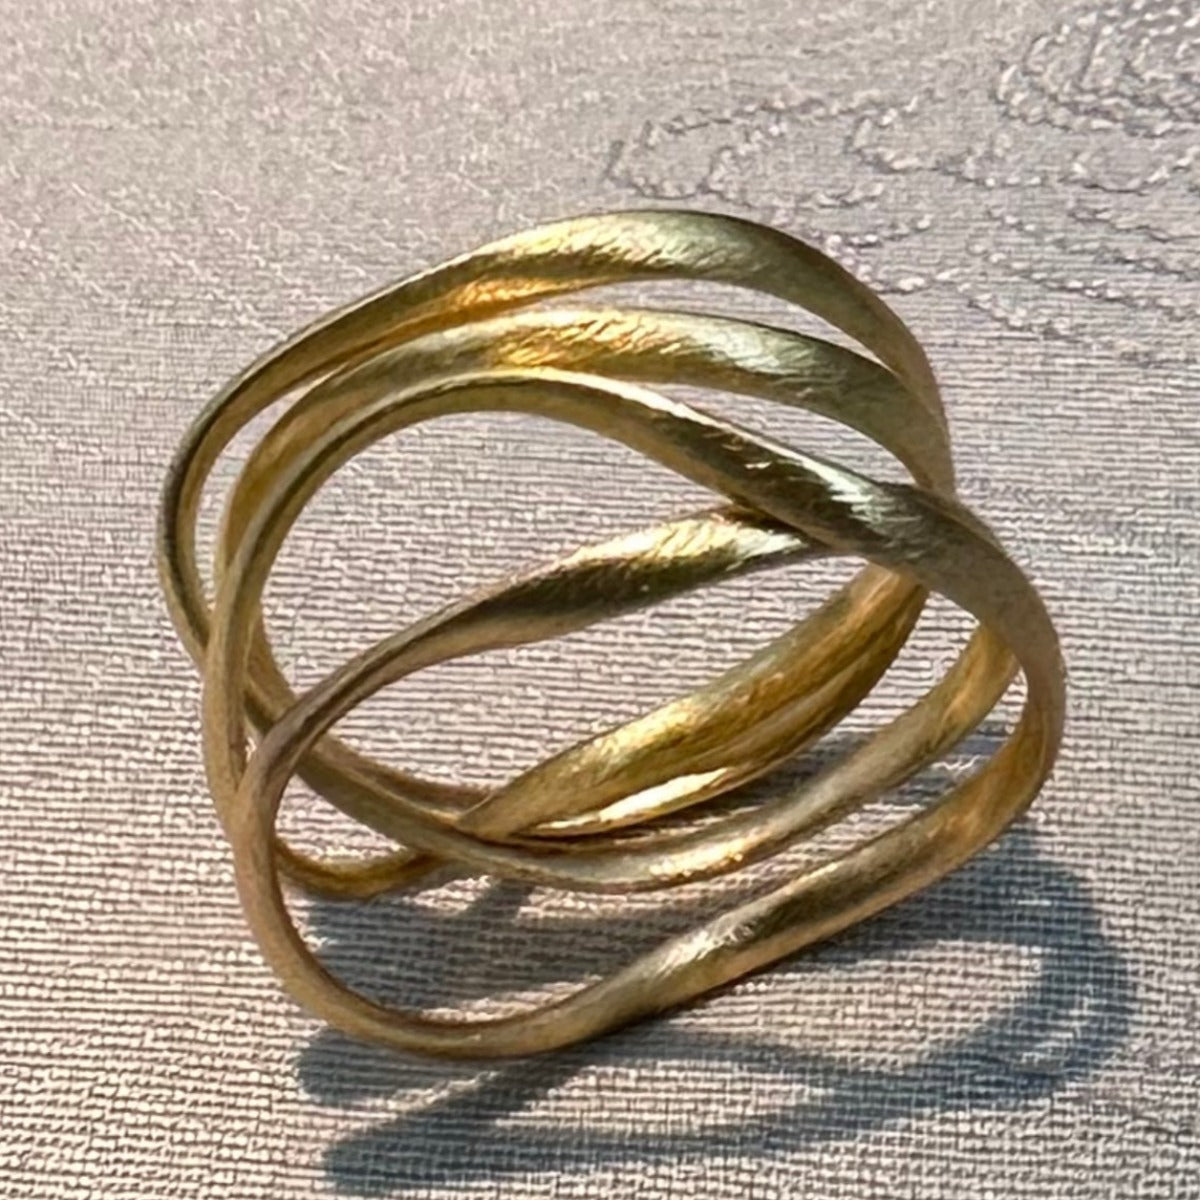 Flair ring i 18kt. guld med 4 viklinger